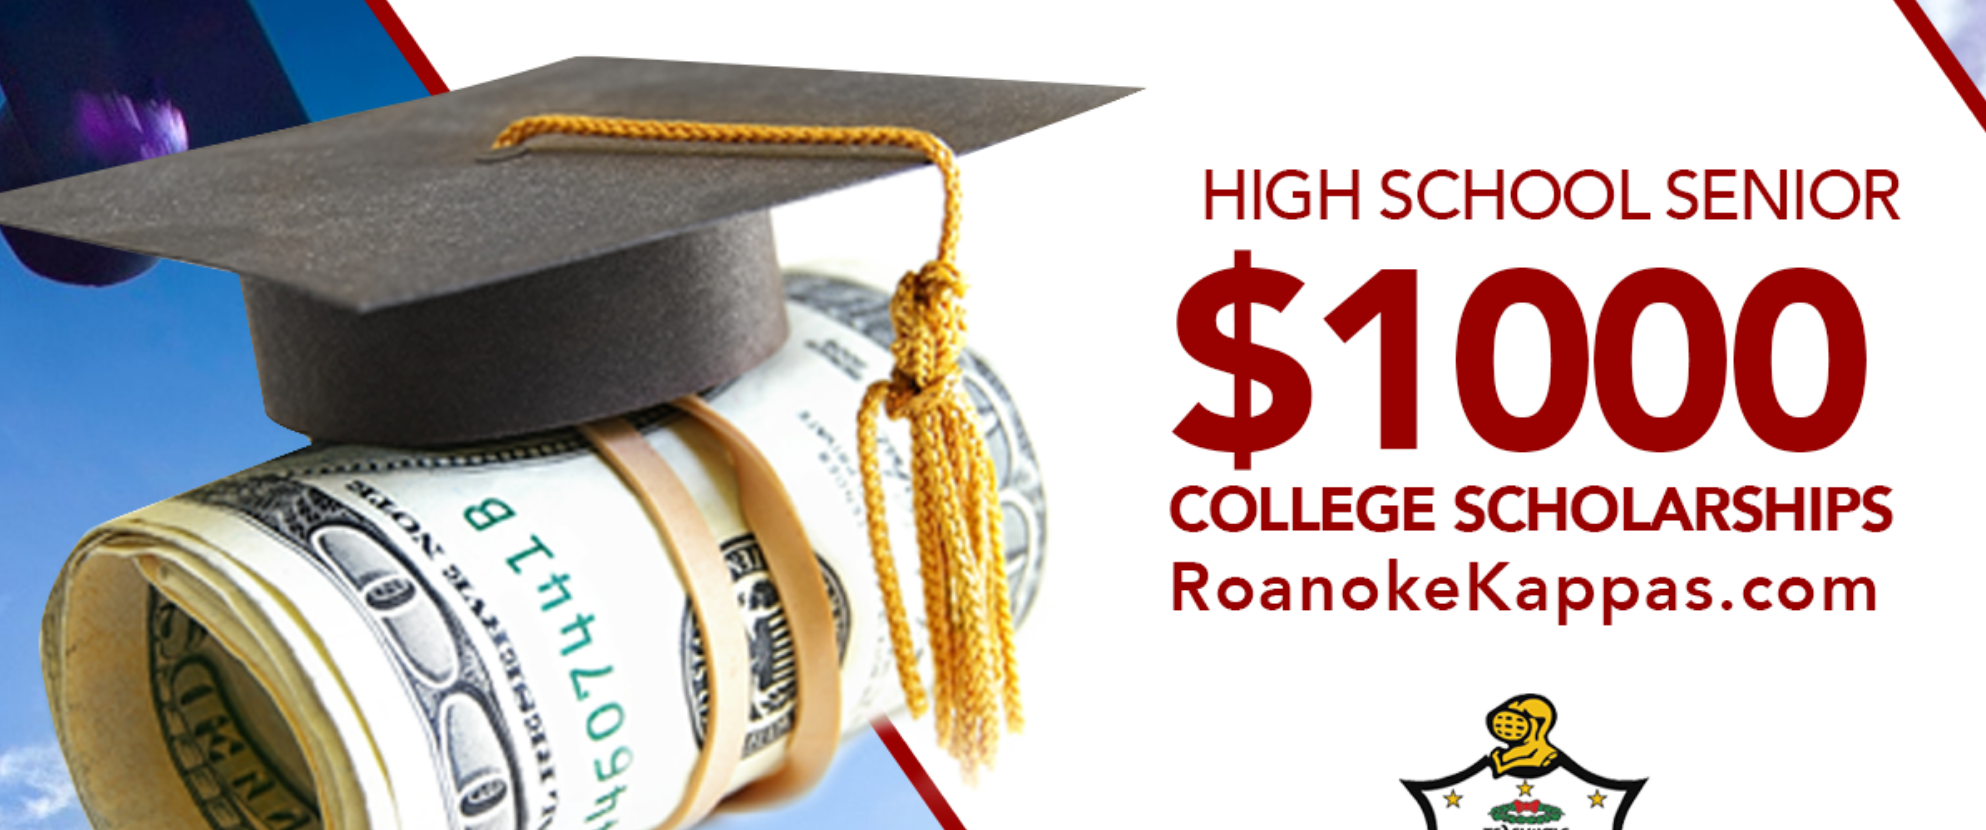 2016 Roanoke Kappa Foundation Scholarship Application